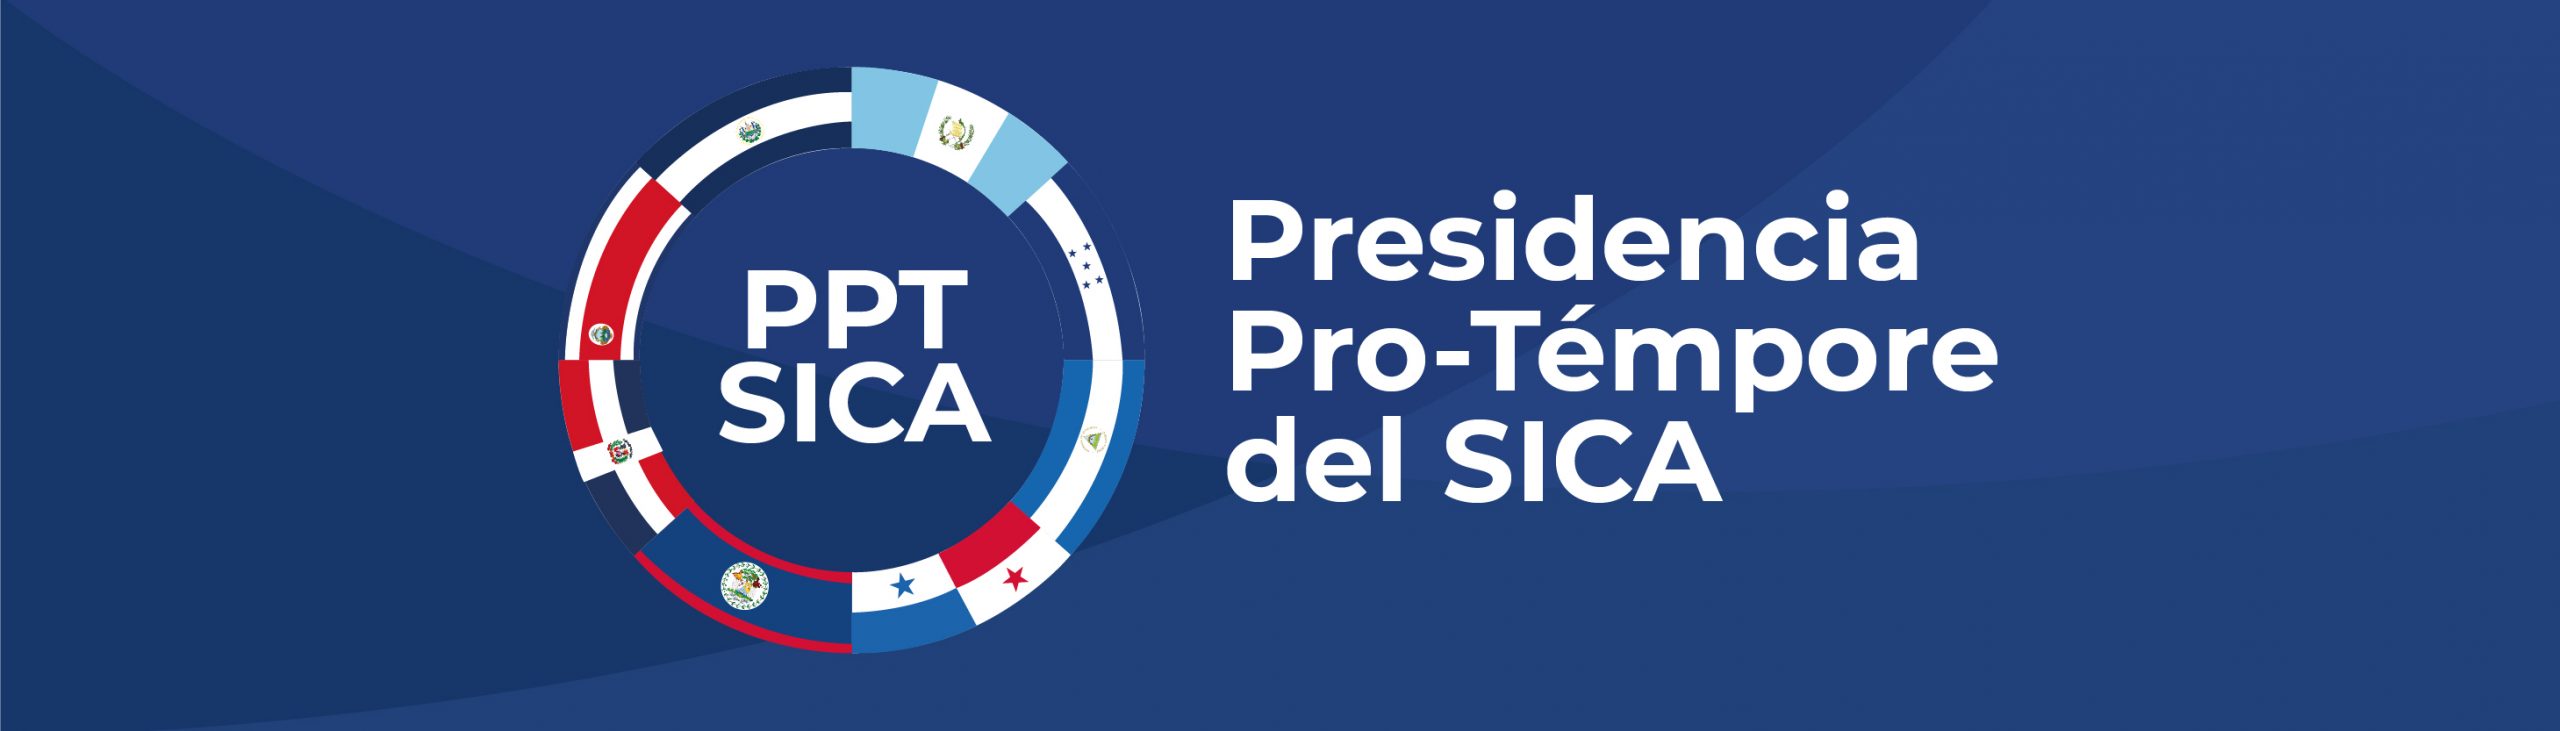 presidencia pro-témpore nicaragua sica